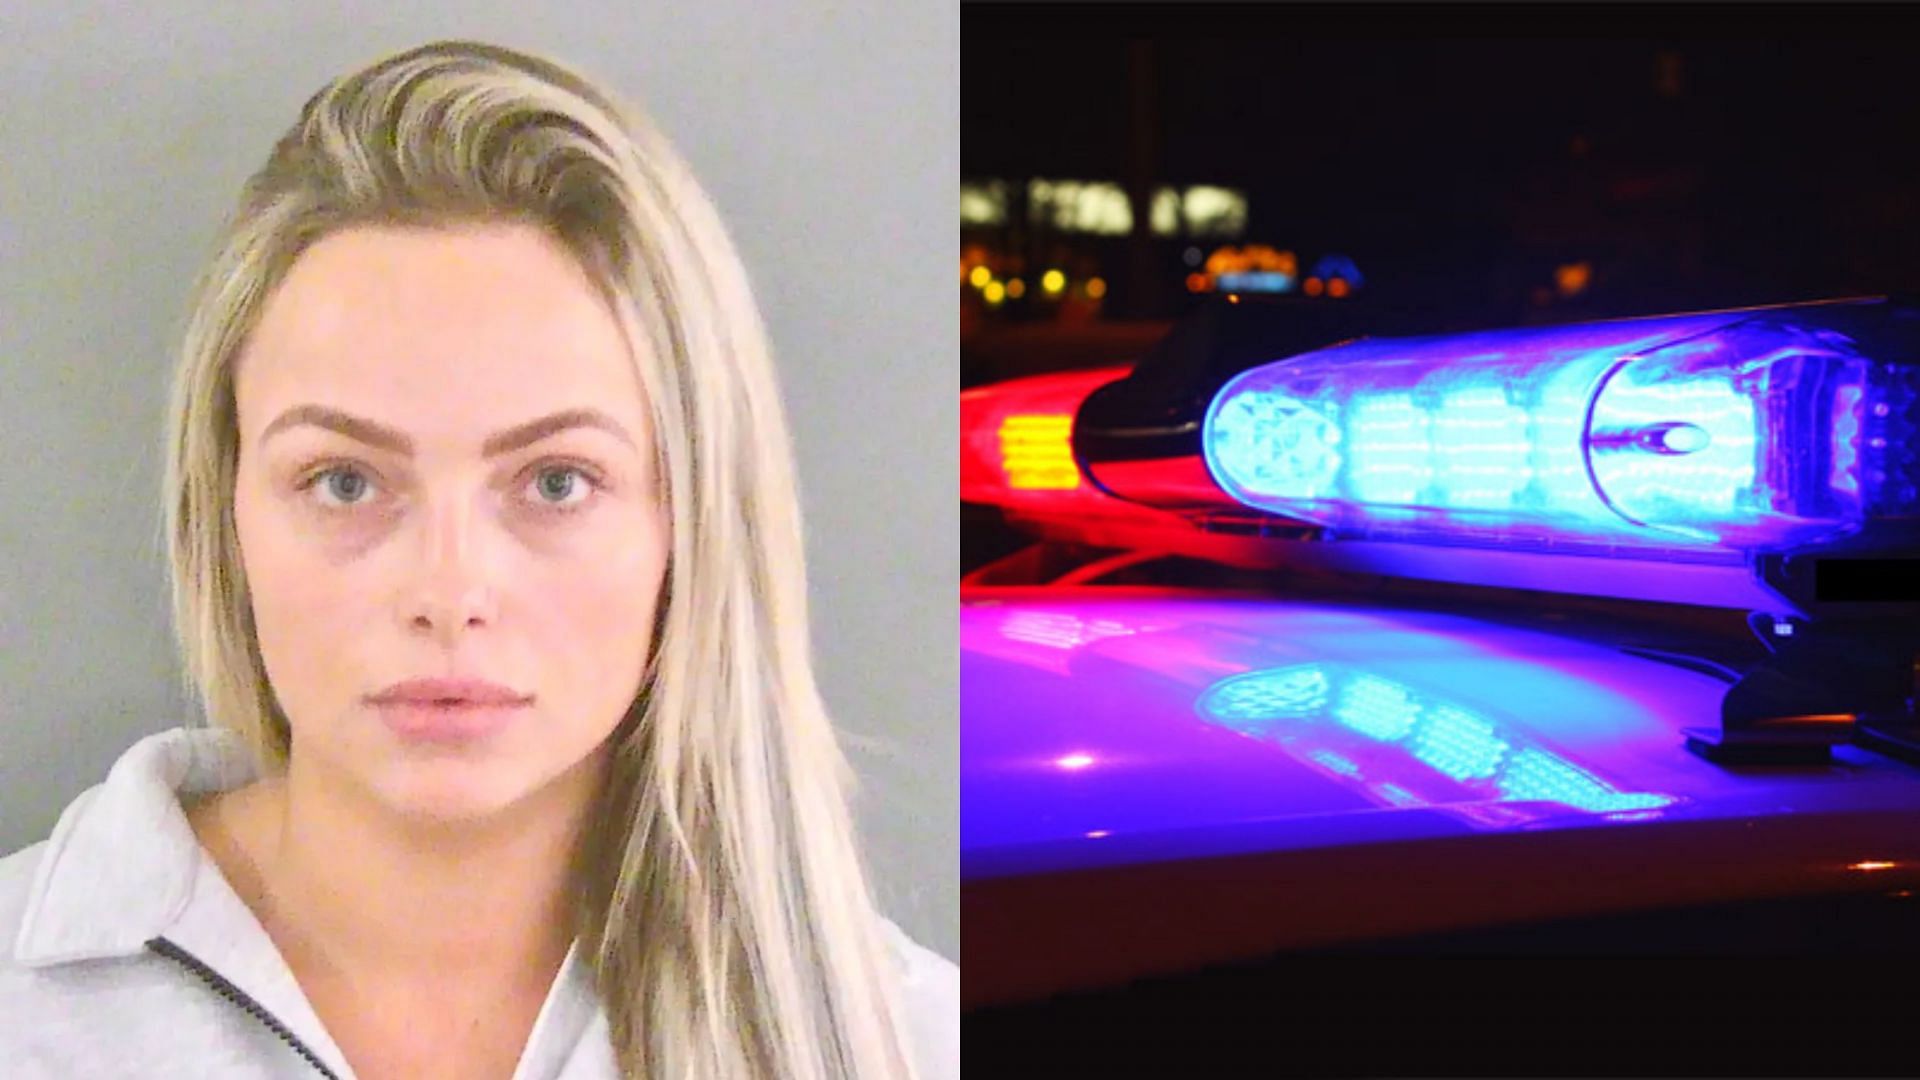 WWE Superstar Liv Morgan was arrested last Thursday in Florida